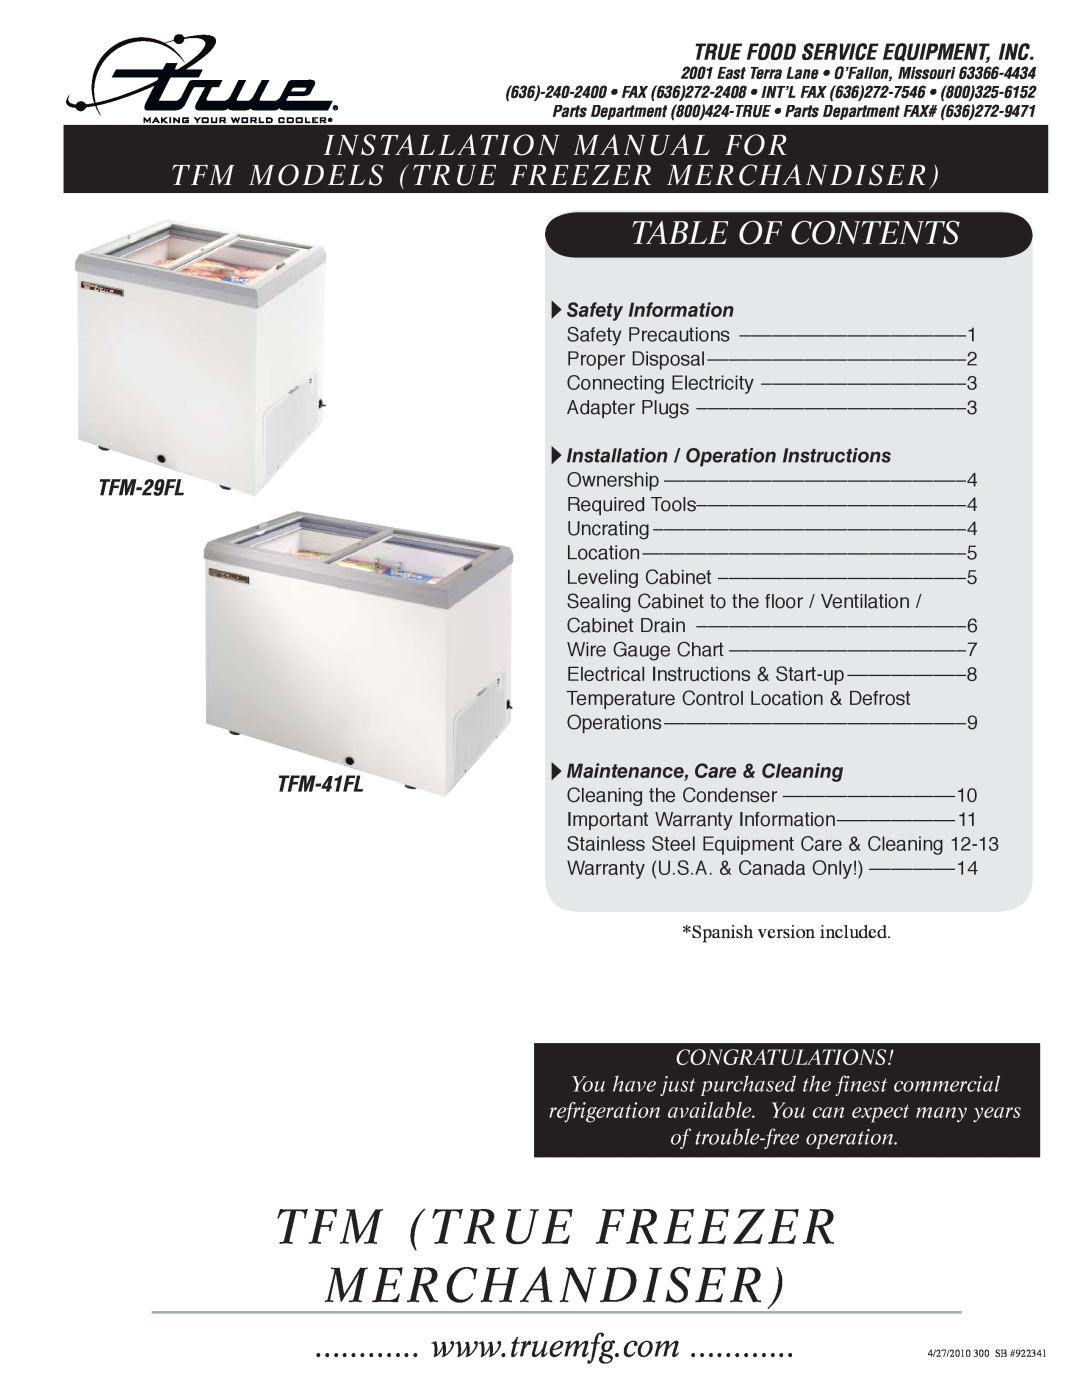 True Manufacturing Company 922341 installation manual Tfm True Freezer Merchandiser, Table Of Contents, Congratulations 